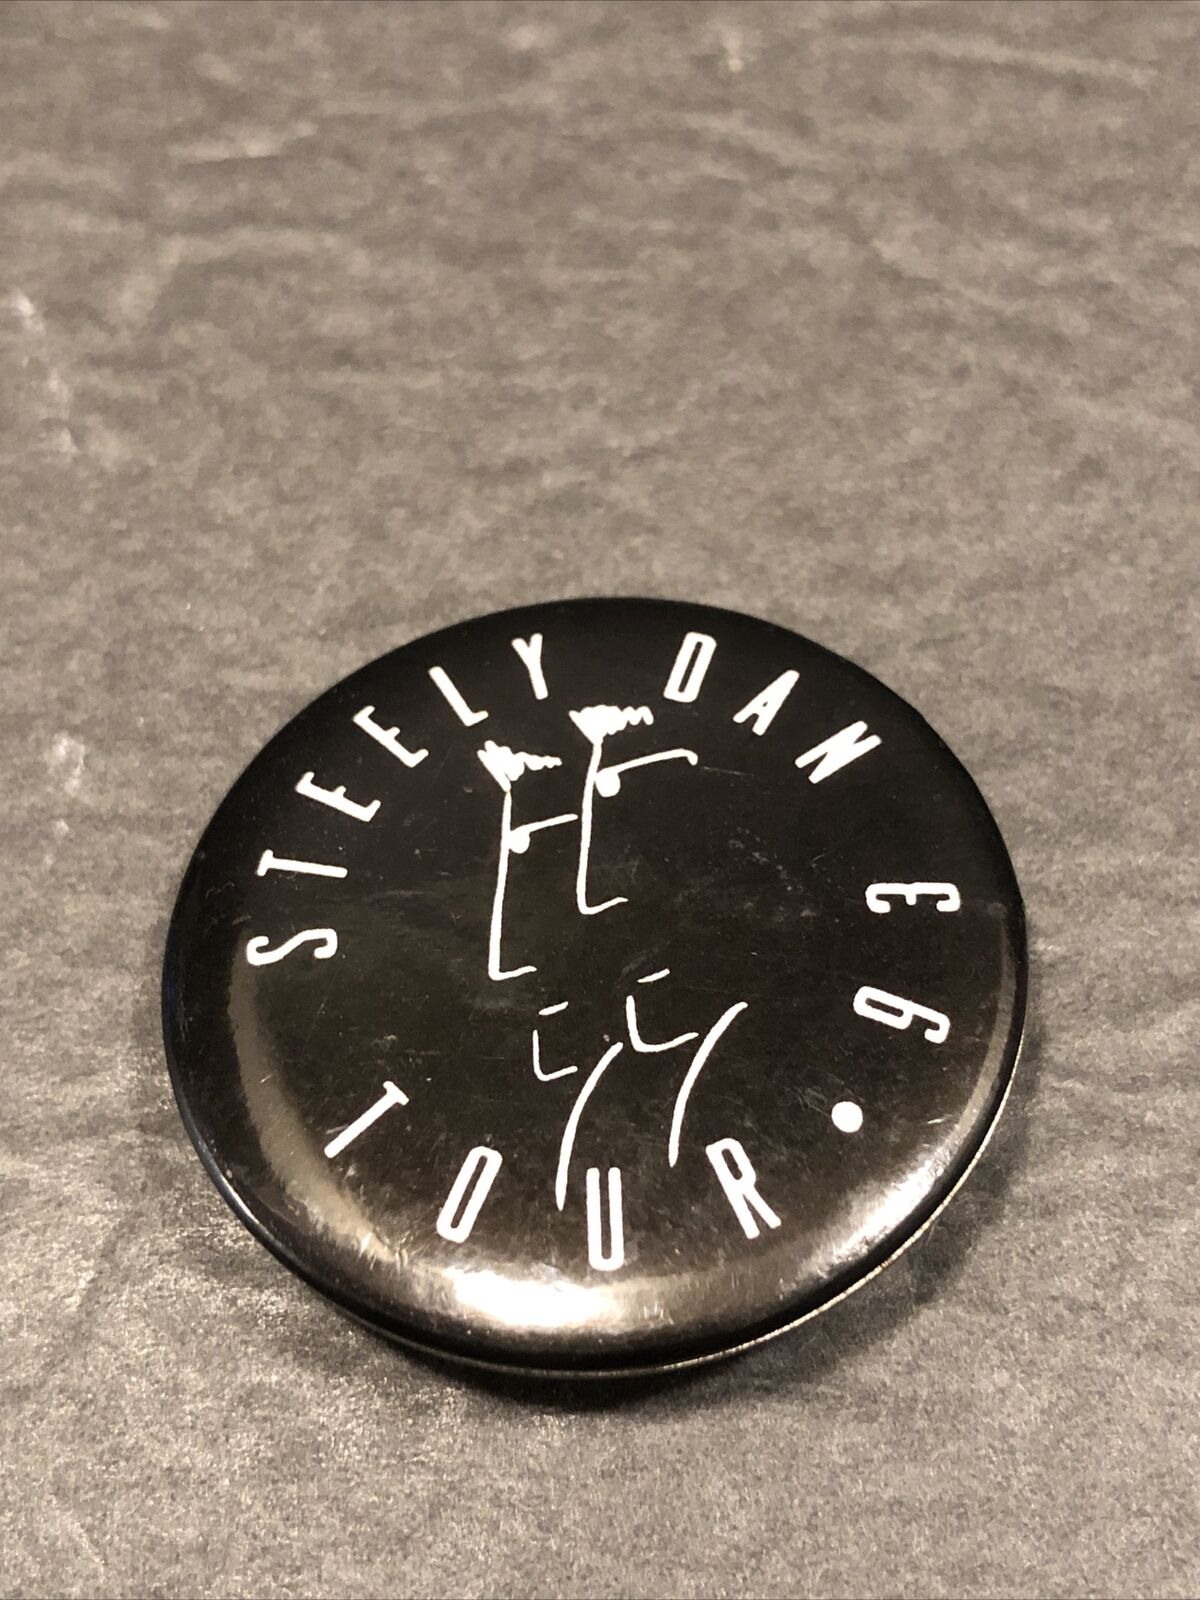 STEELY DAN Tour \'93 Button Badge Pinback official tour merch